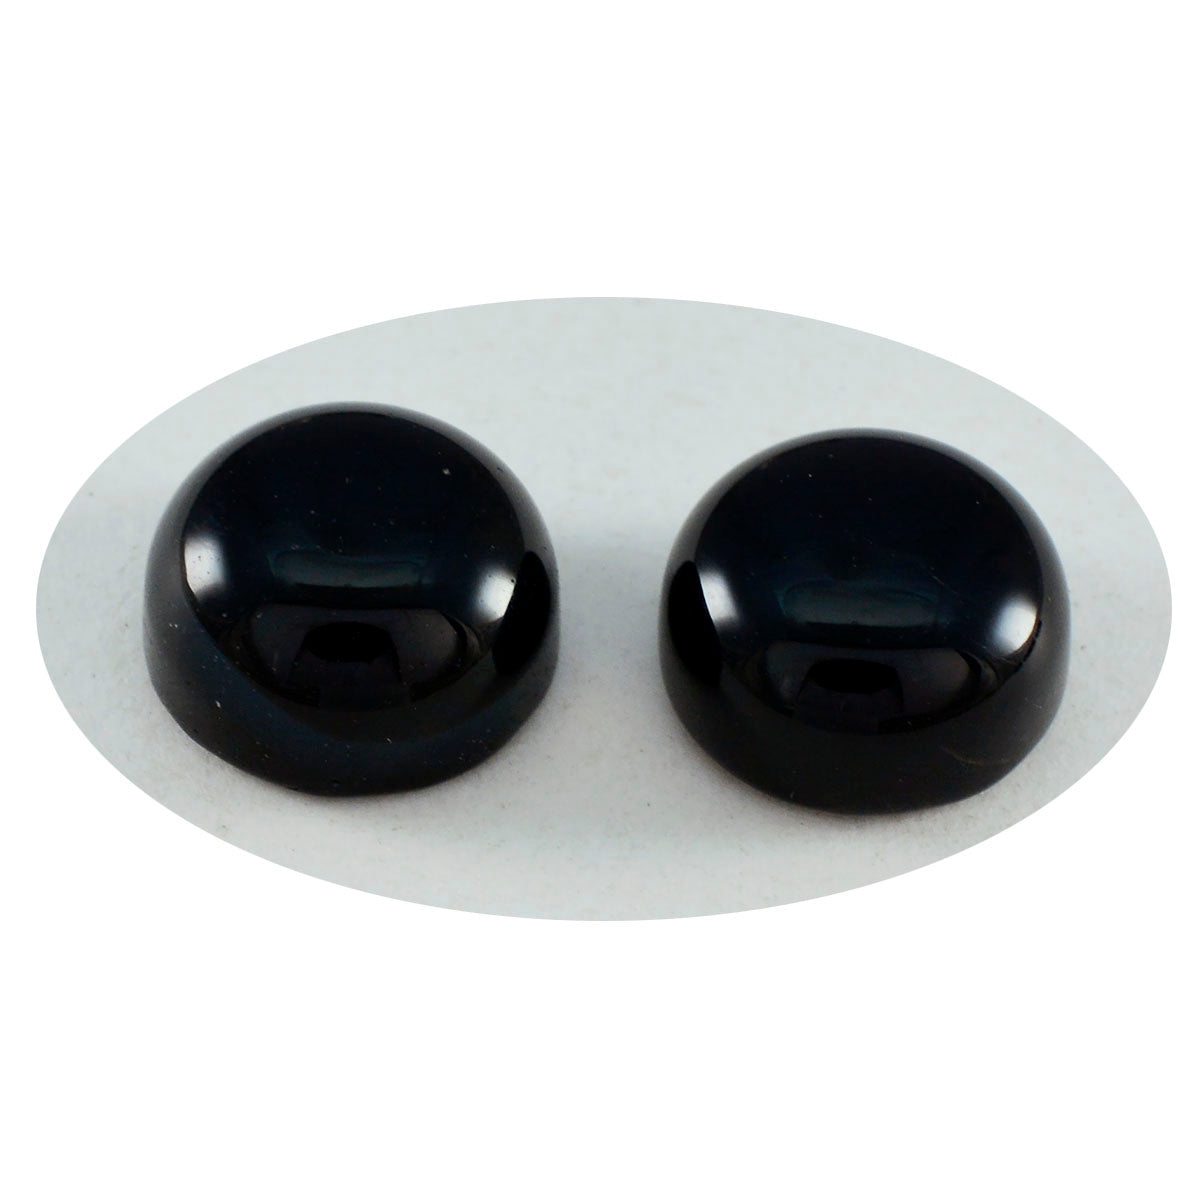 Riyogems 1PC Black Onyx Cabochon 12X12 mm Round Shape handsome Quality Loose Gems